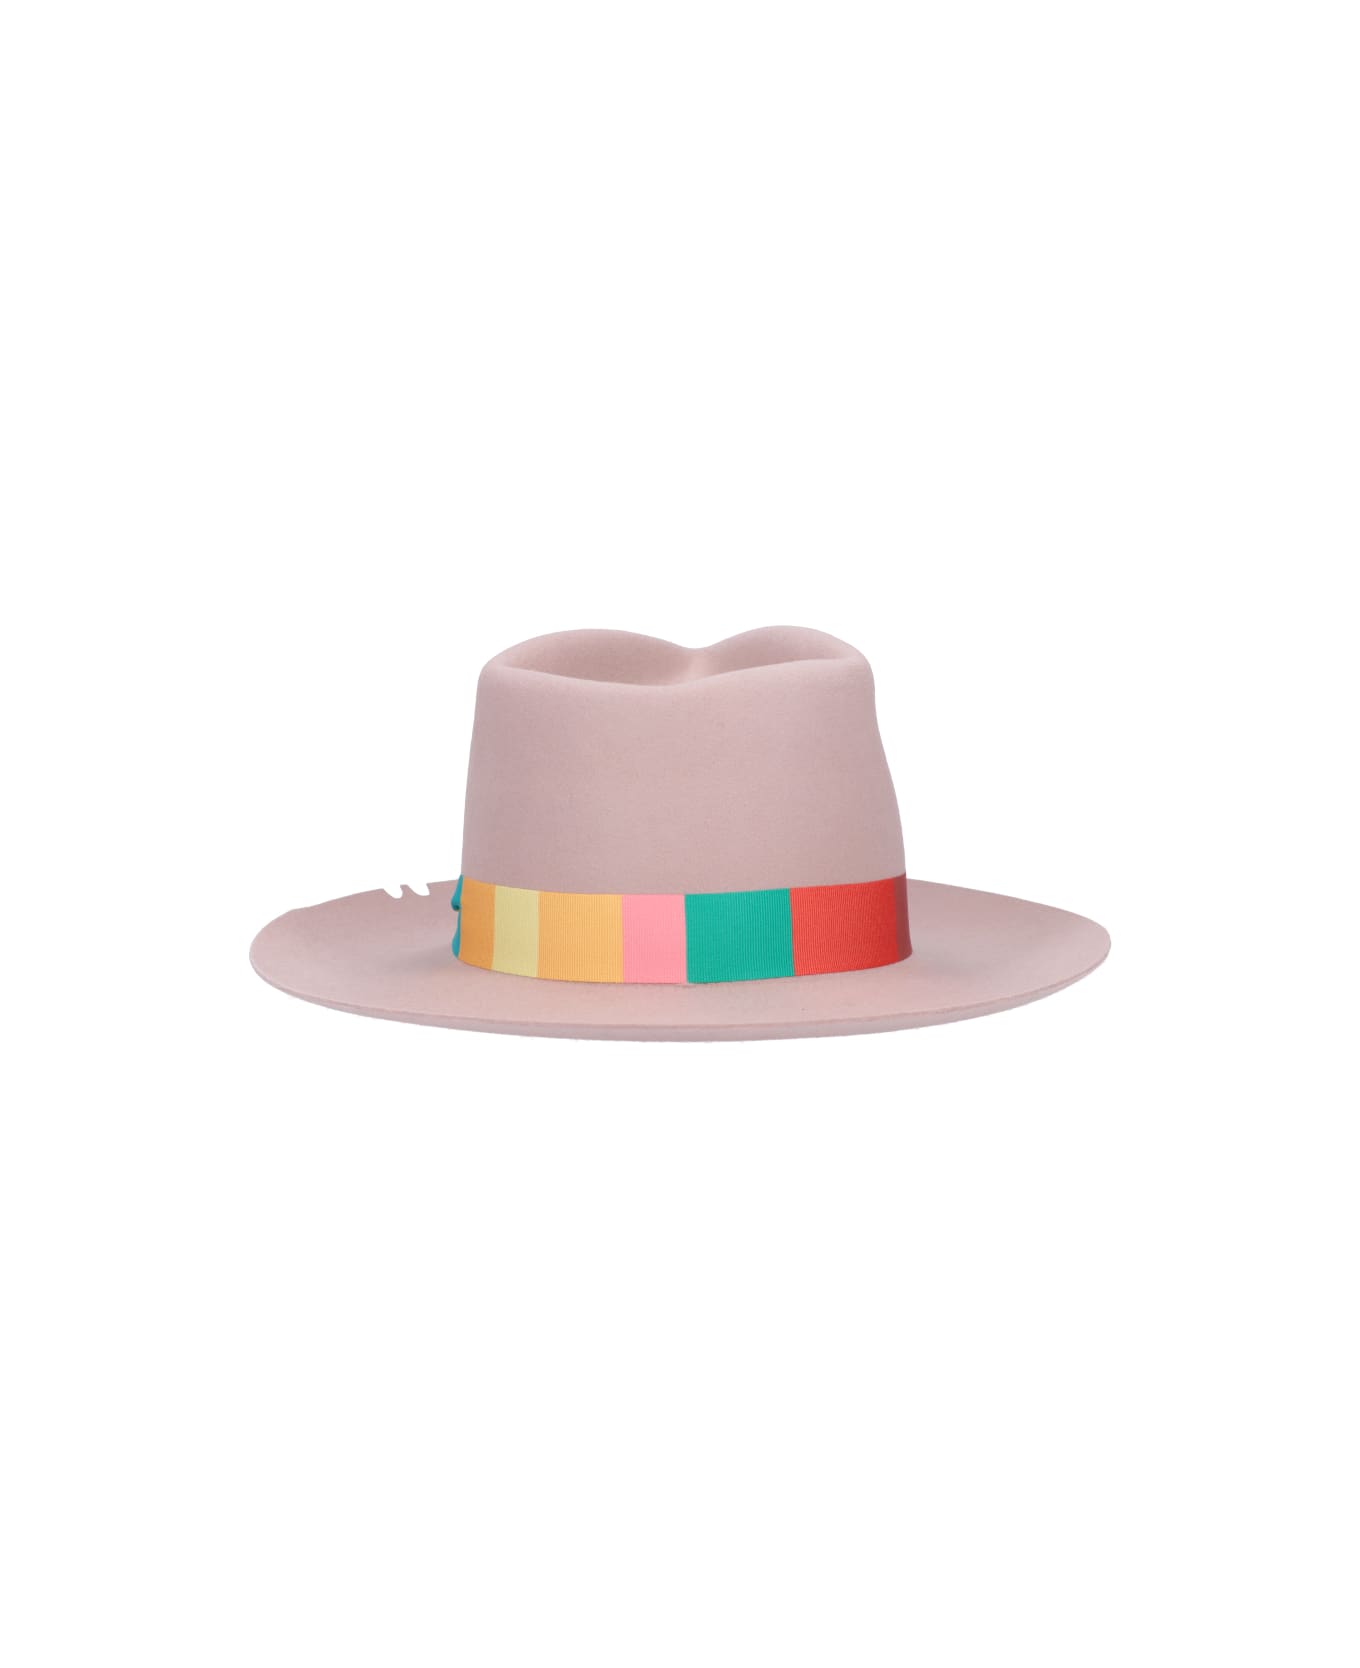 Super Duper Hats Hat - Beige